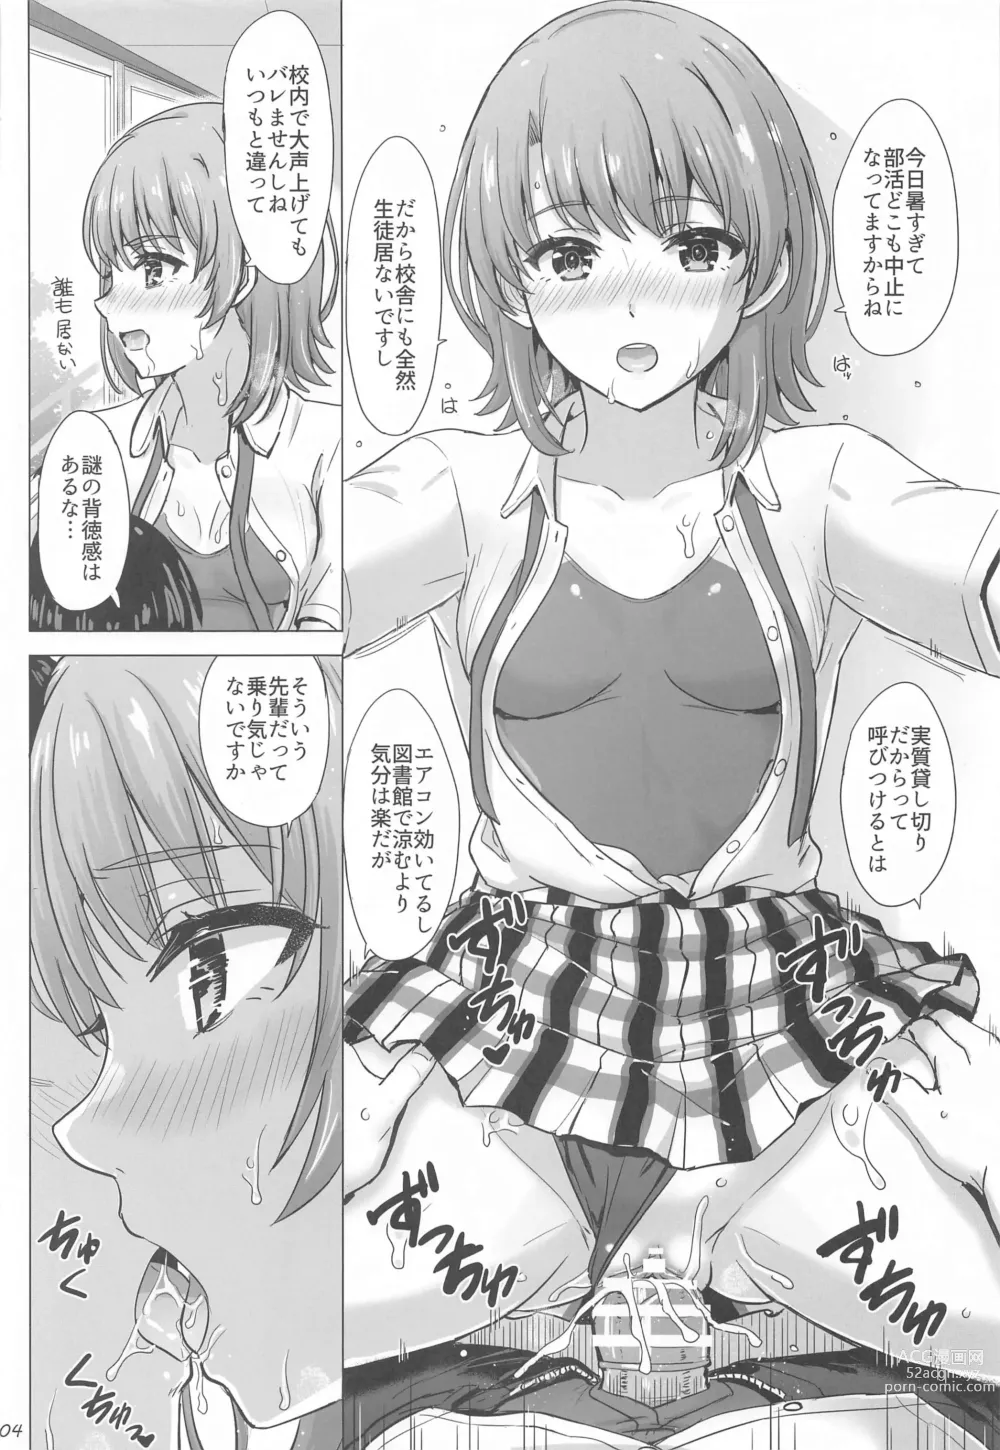 Page 3 of doujinshi Isshiki Iroha no Iyarashii Natsuyasumi. - Irohas days of summer are many sex next year.